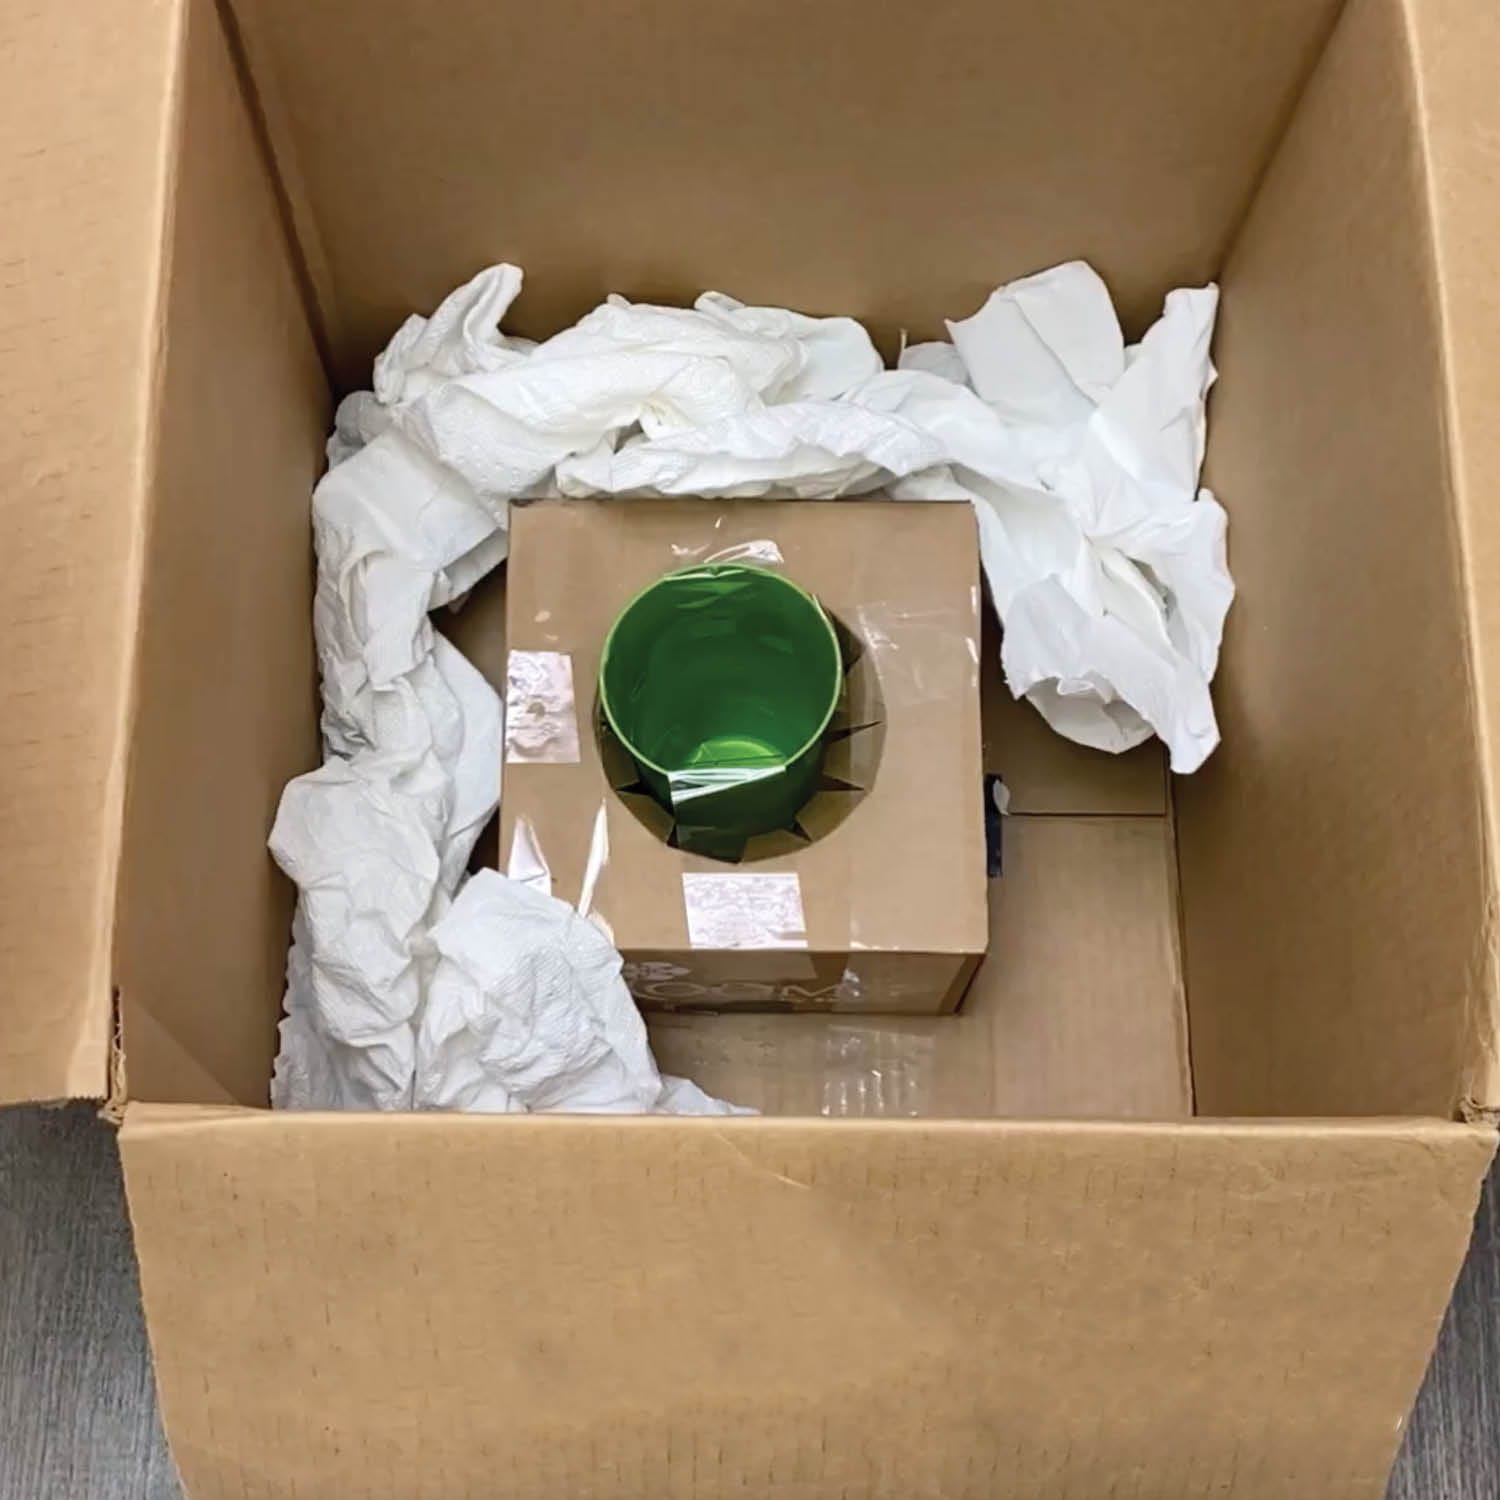 Flower shipping box preparation - DBAndrea